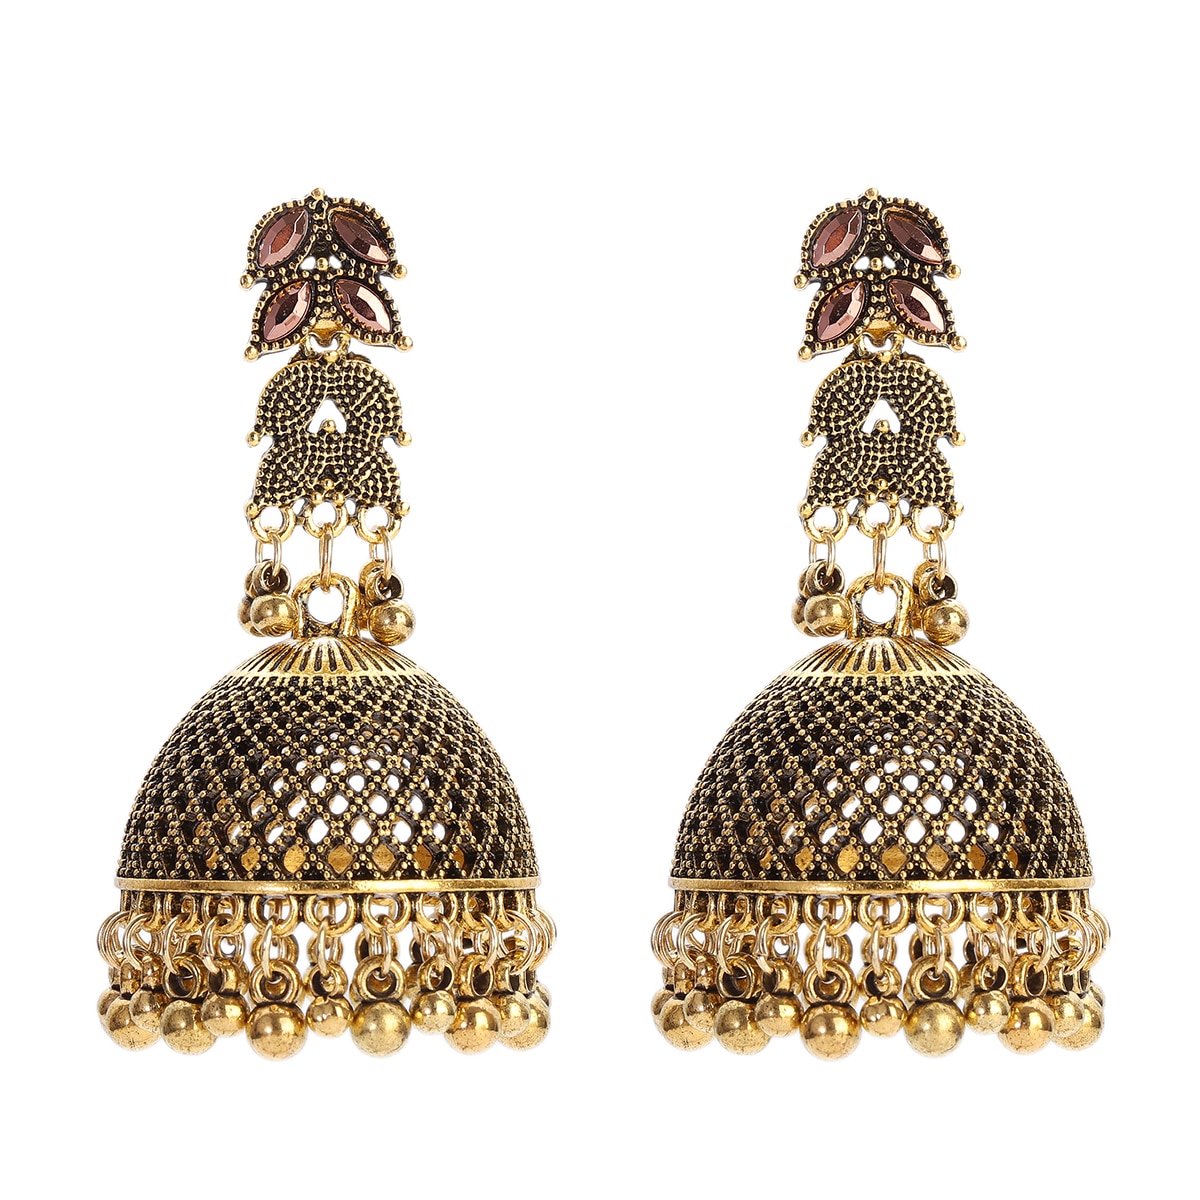 Ethnic-Big-Gold-Color-Indian-Jhumka-Earrings-For-Women-Pendient-Retro-Bells-Tibetan-Earrings-Oorbell-1005004736828927-5